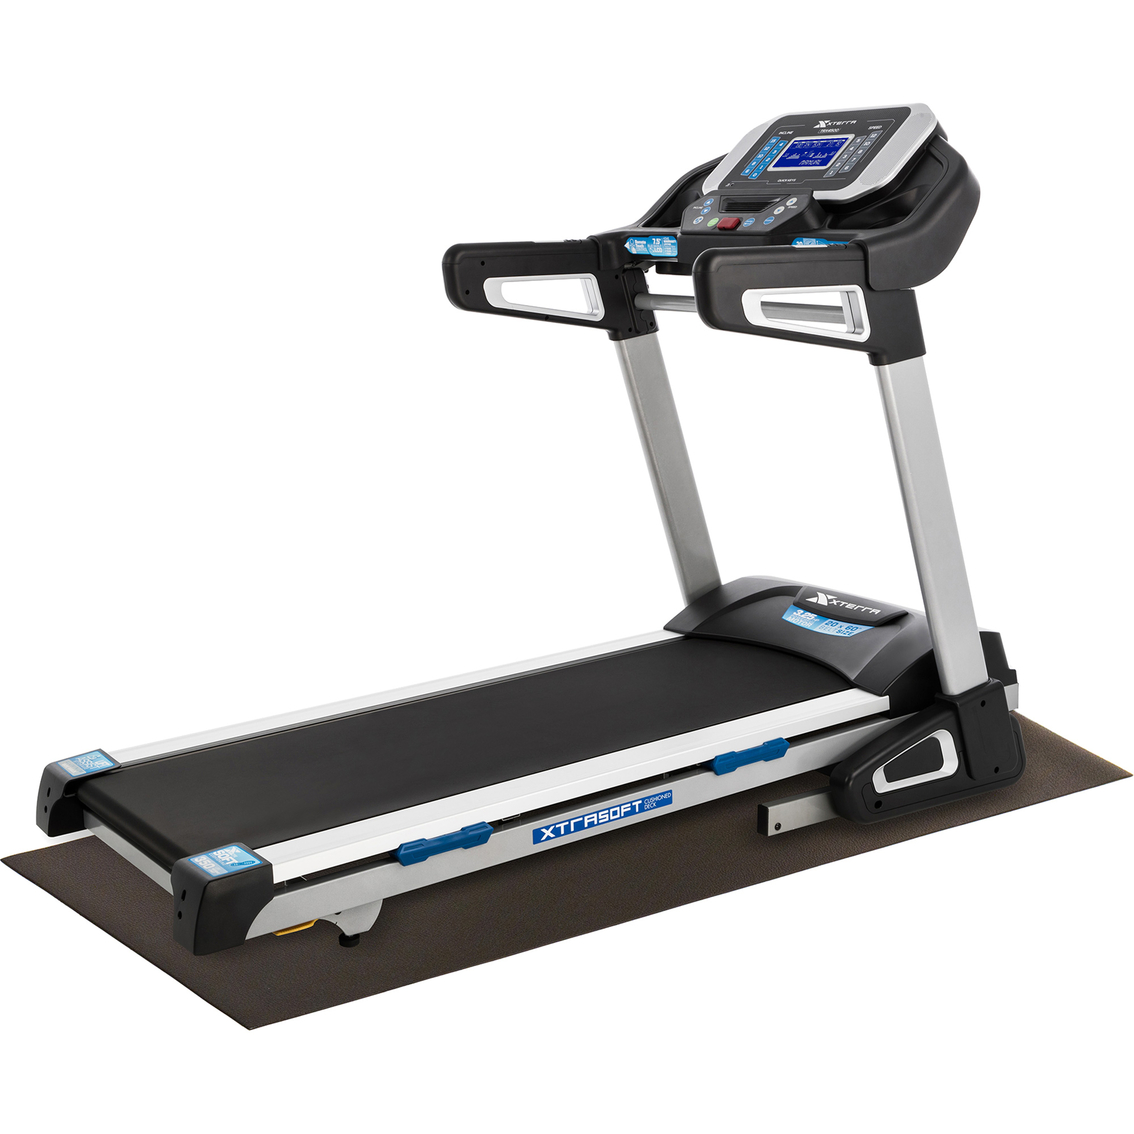 Xterra Fitness Equipment Mat - Image 4 of 4